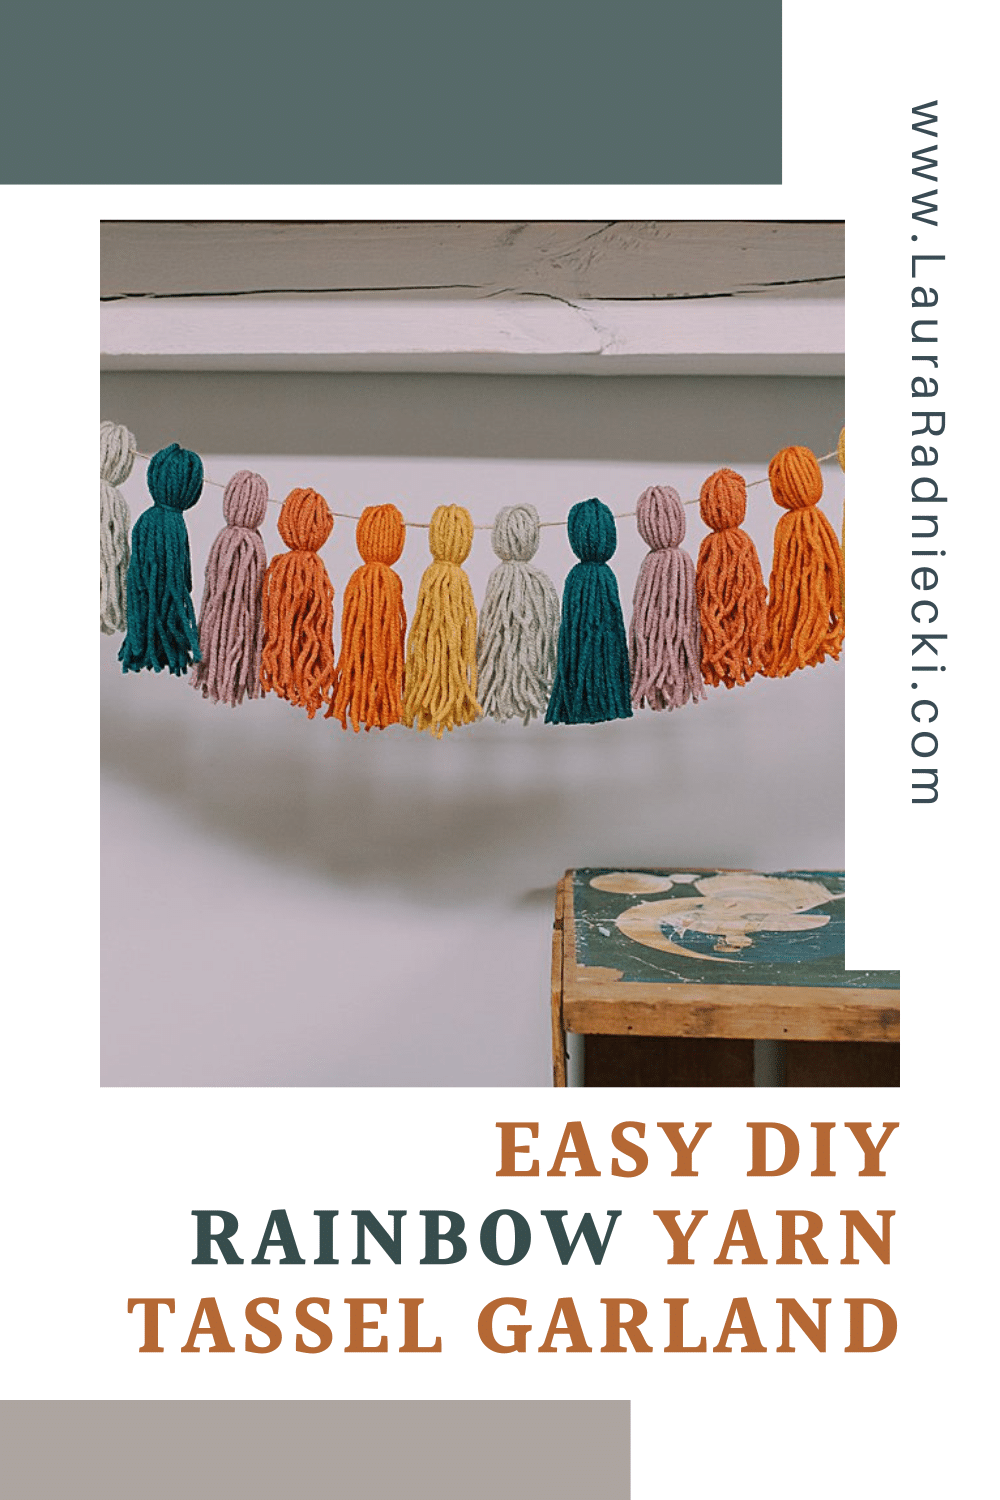 How to Make a Rainbow Yarn Tassel Garland